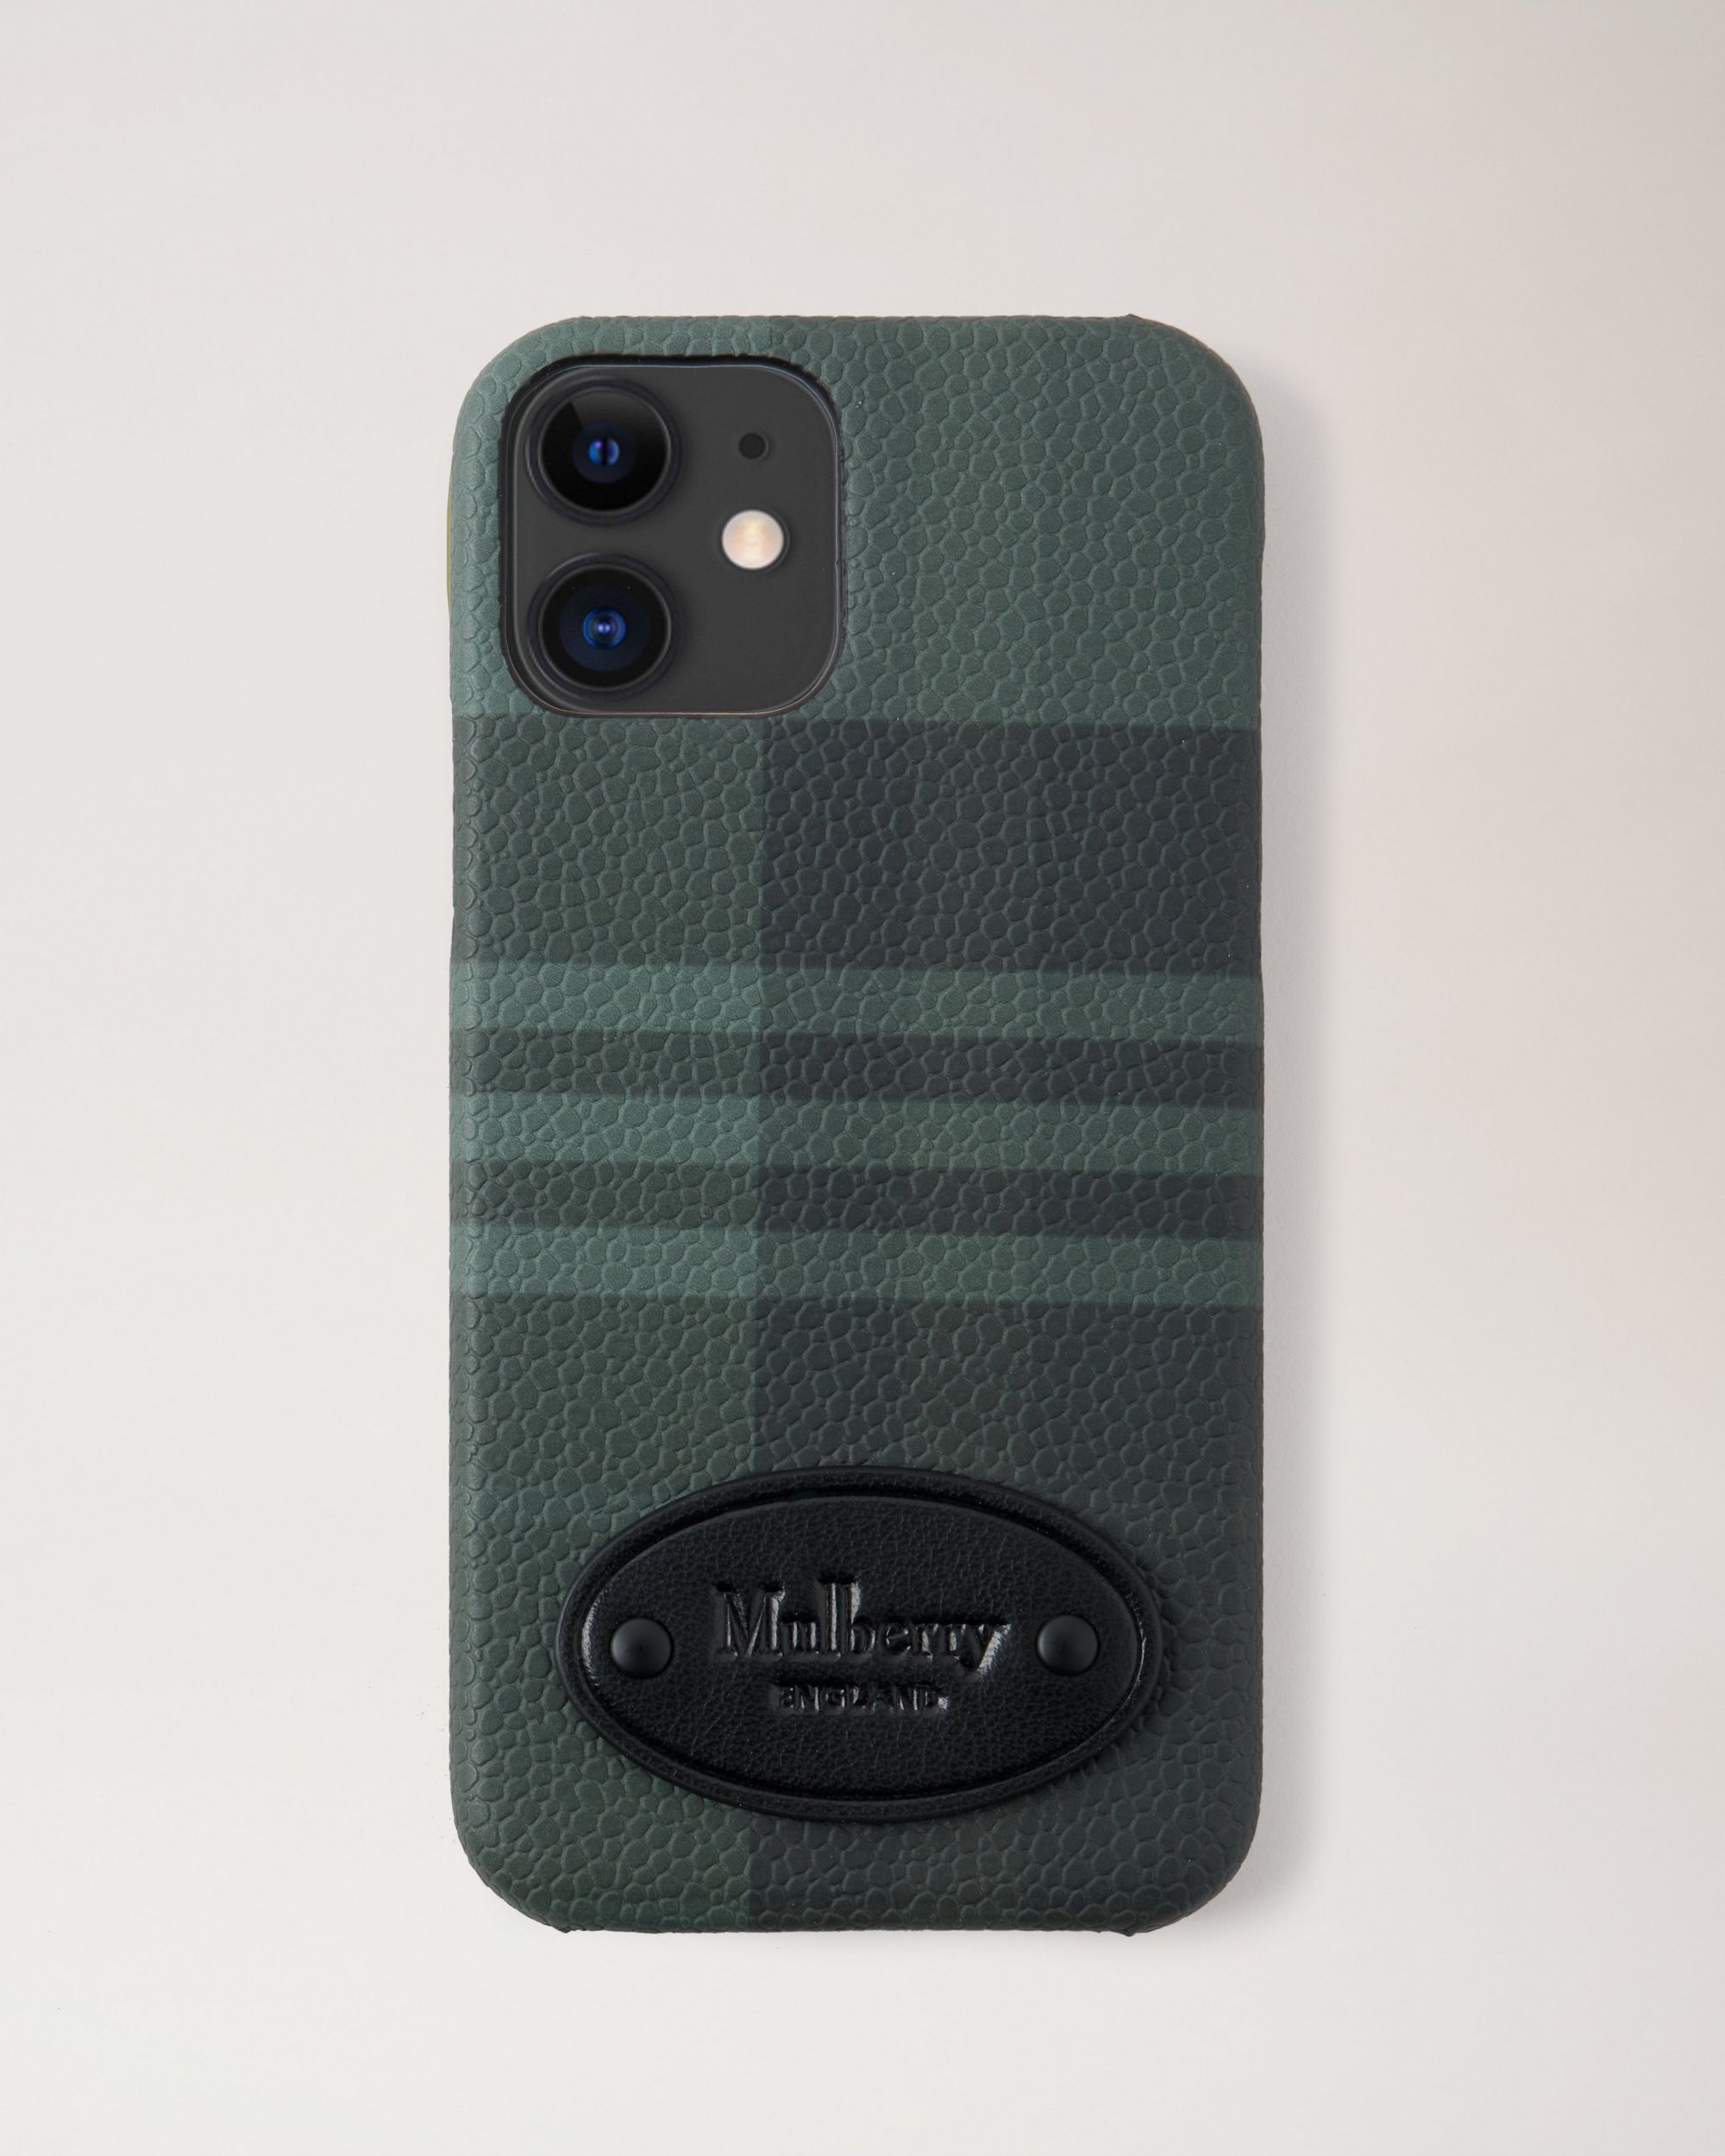 Great tartan patterned iPhone case